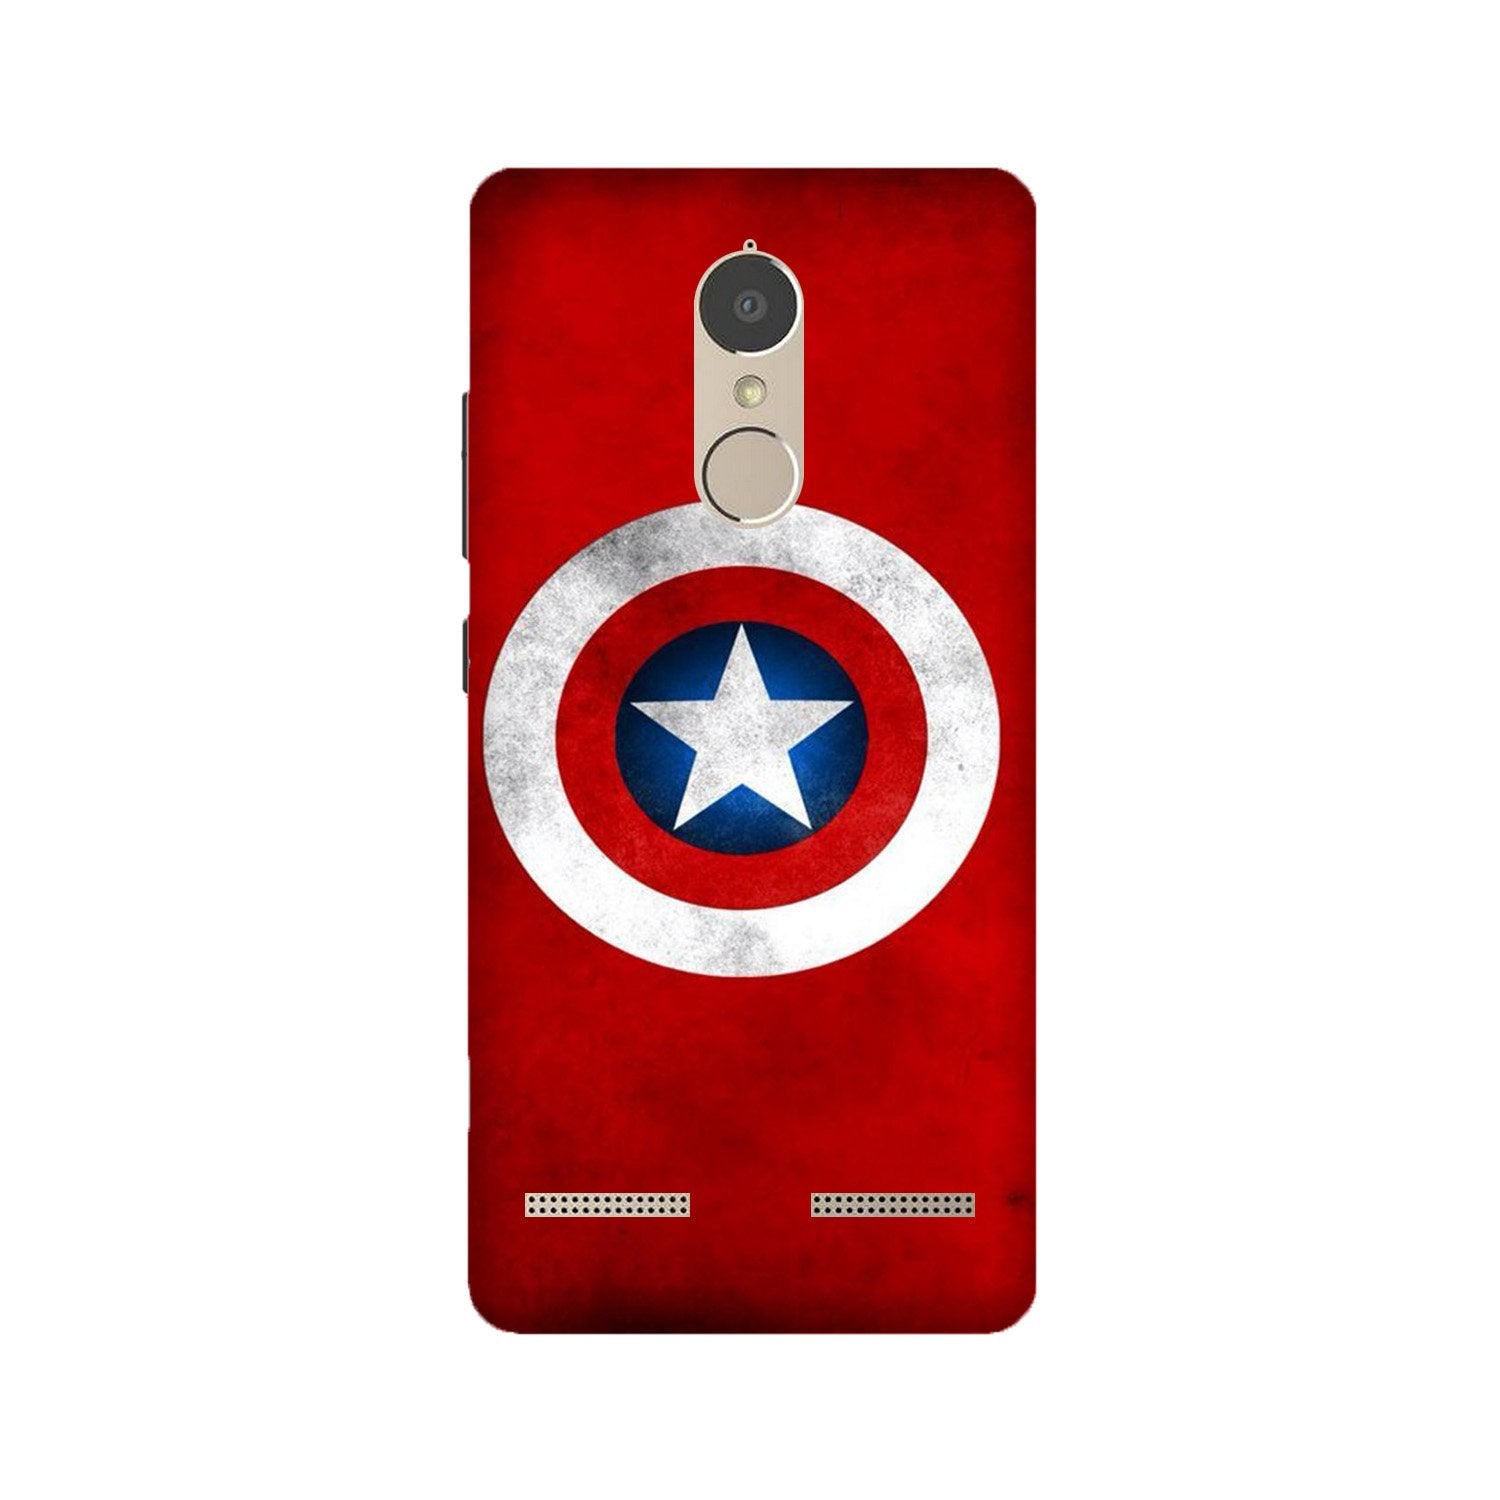 Captain America Case for Lenovo K6 / K6 Power (Design No. 249)